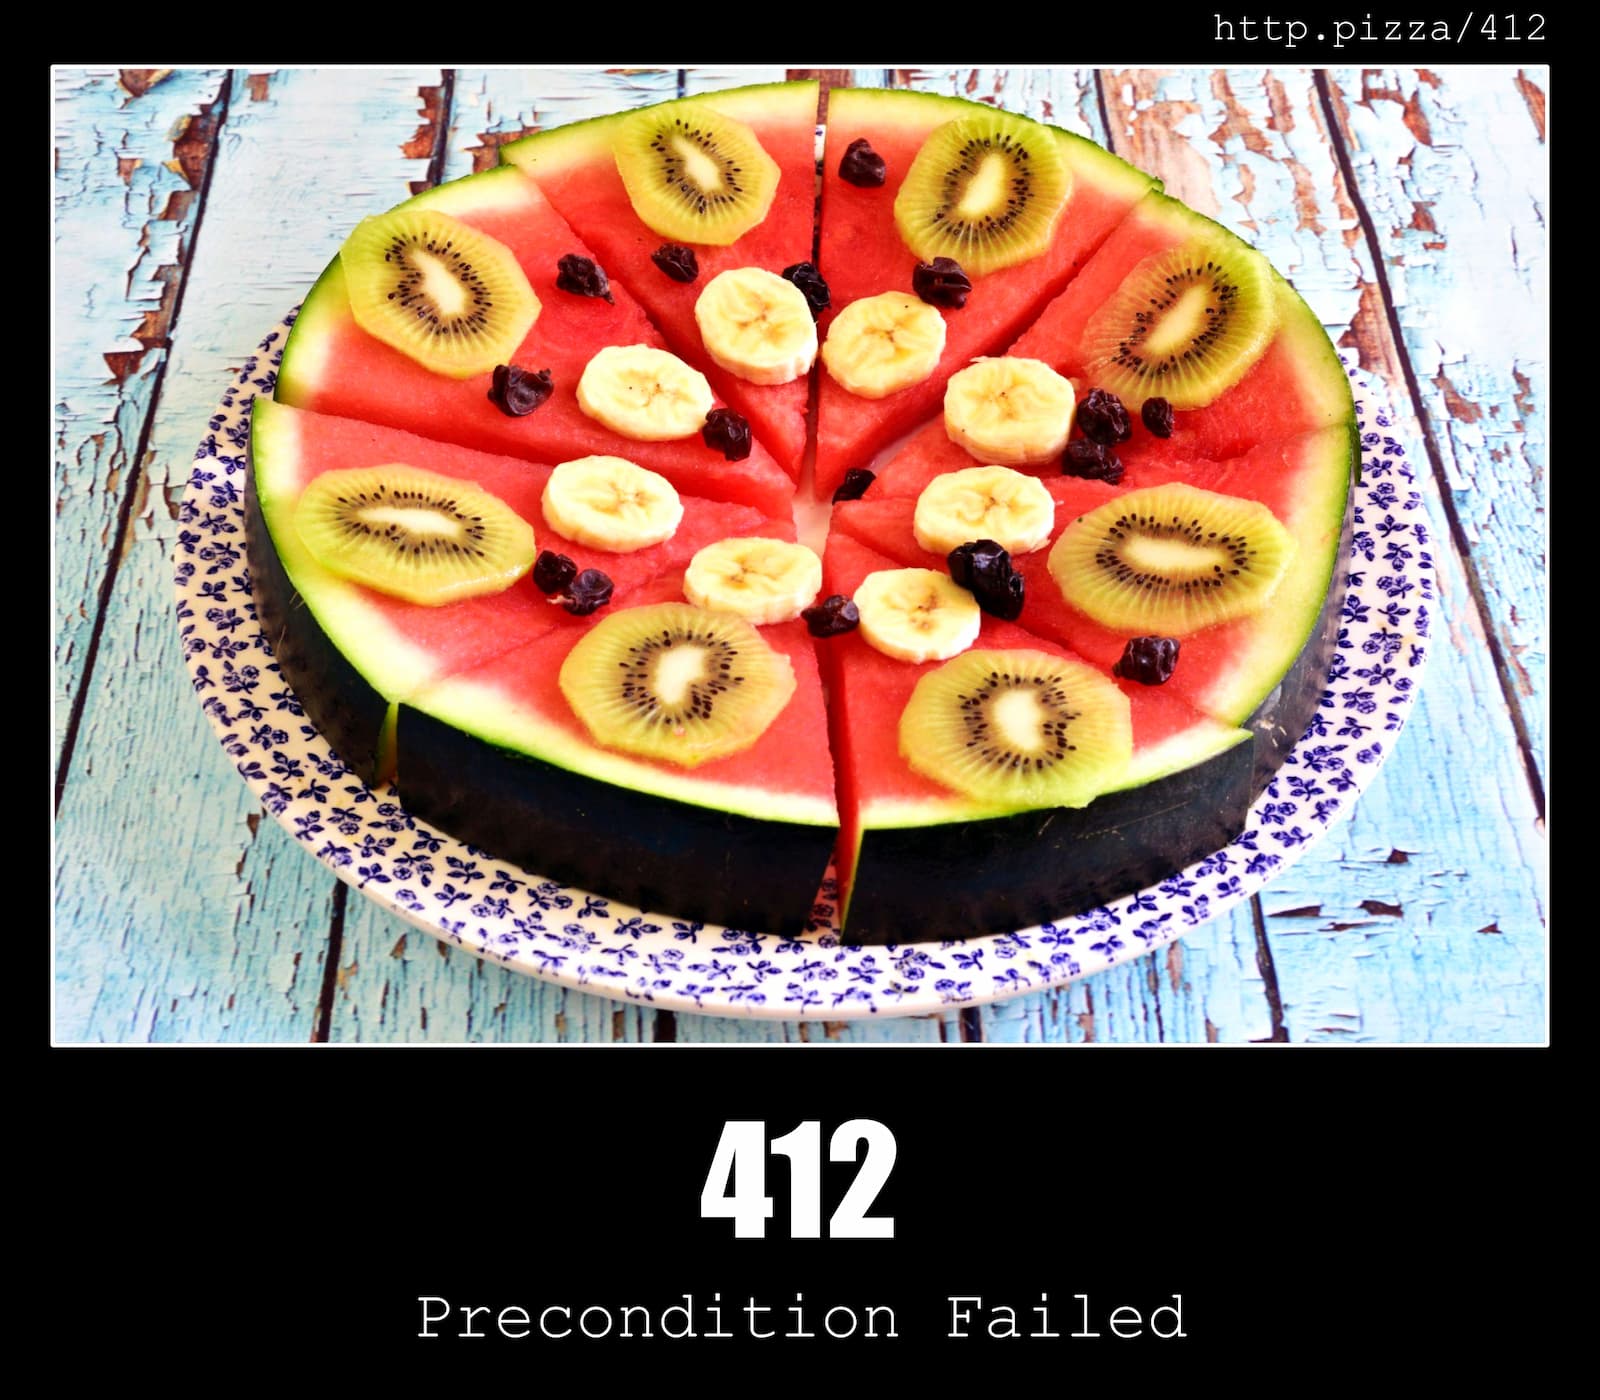 HTTP Status Code 412 Precondition Failed & Pizzas